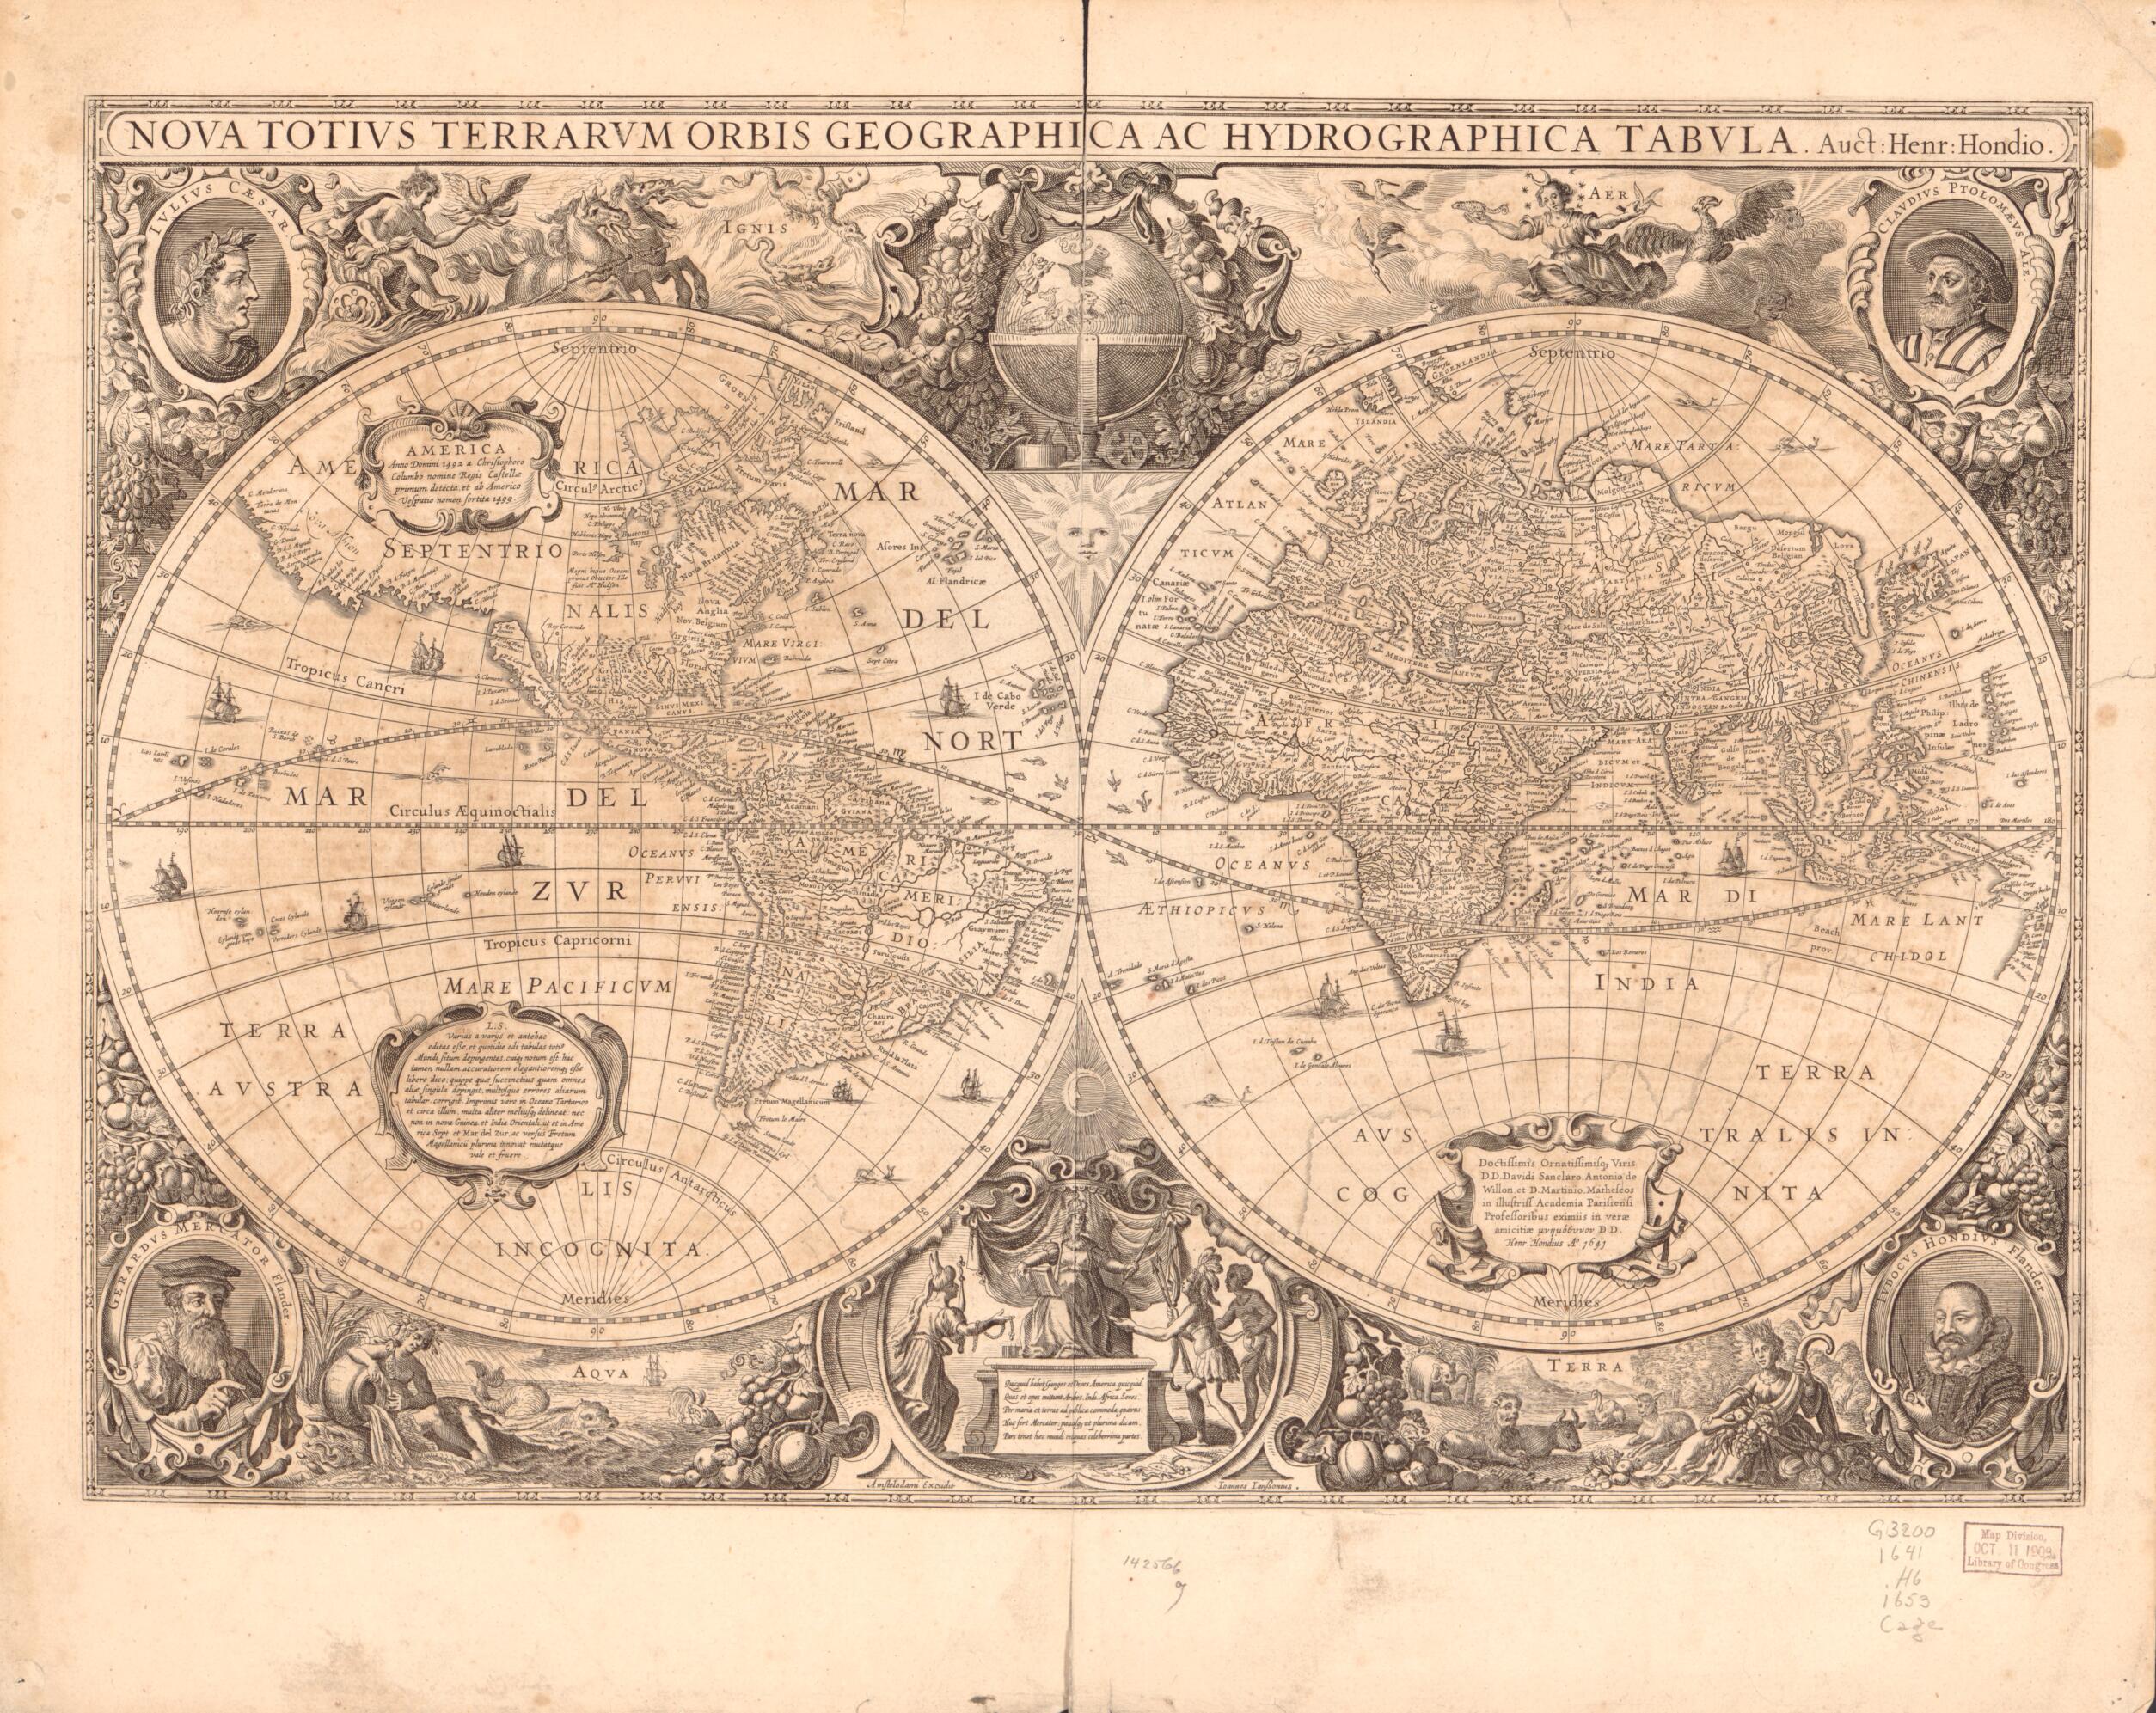 This old map of Nova Totivs Terrarvm Orbis Geographica Ac Hydrographica Tabvla (Nova Totius Terrarum Orbis Geographica Ac Hydrographica Tabula, Beschrijvinghe Des Geheelen Aerdtrycx) from 1641 was created by Jodocus Hondius, Jan Jansson in 1641